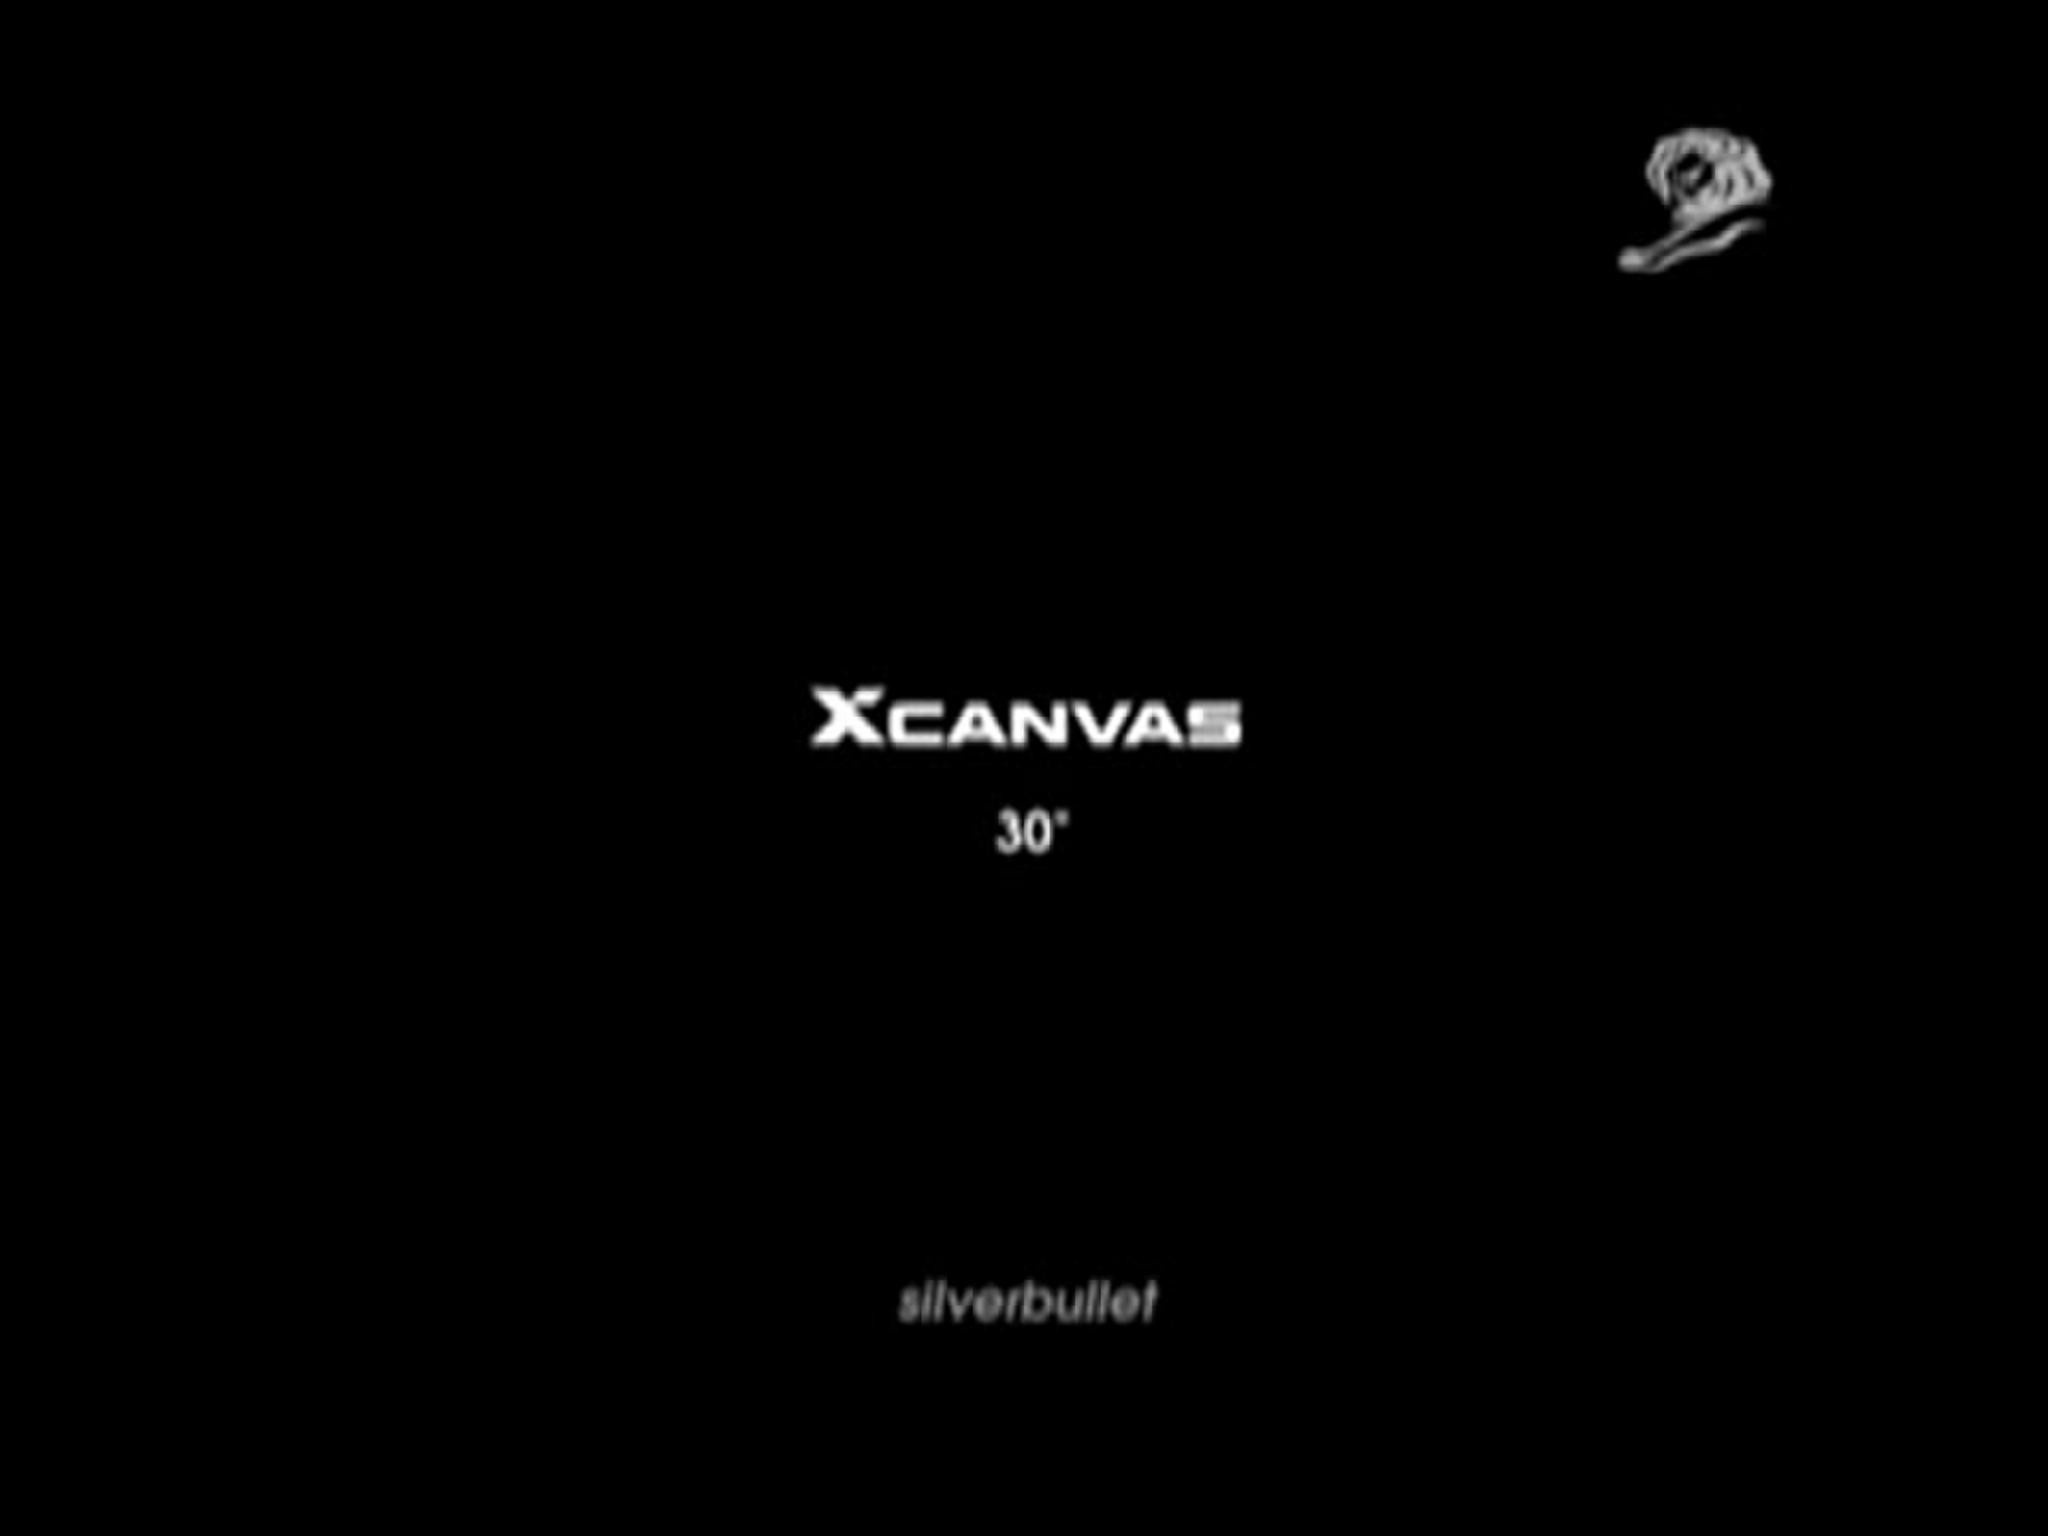 XCANVAS BROADWAY LCD TV